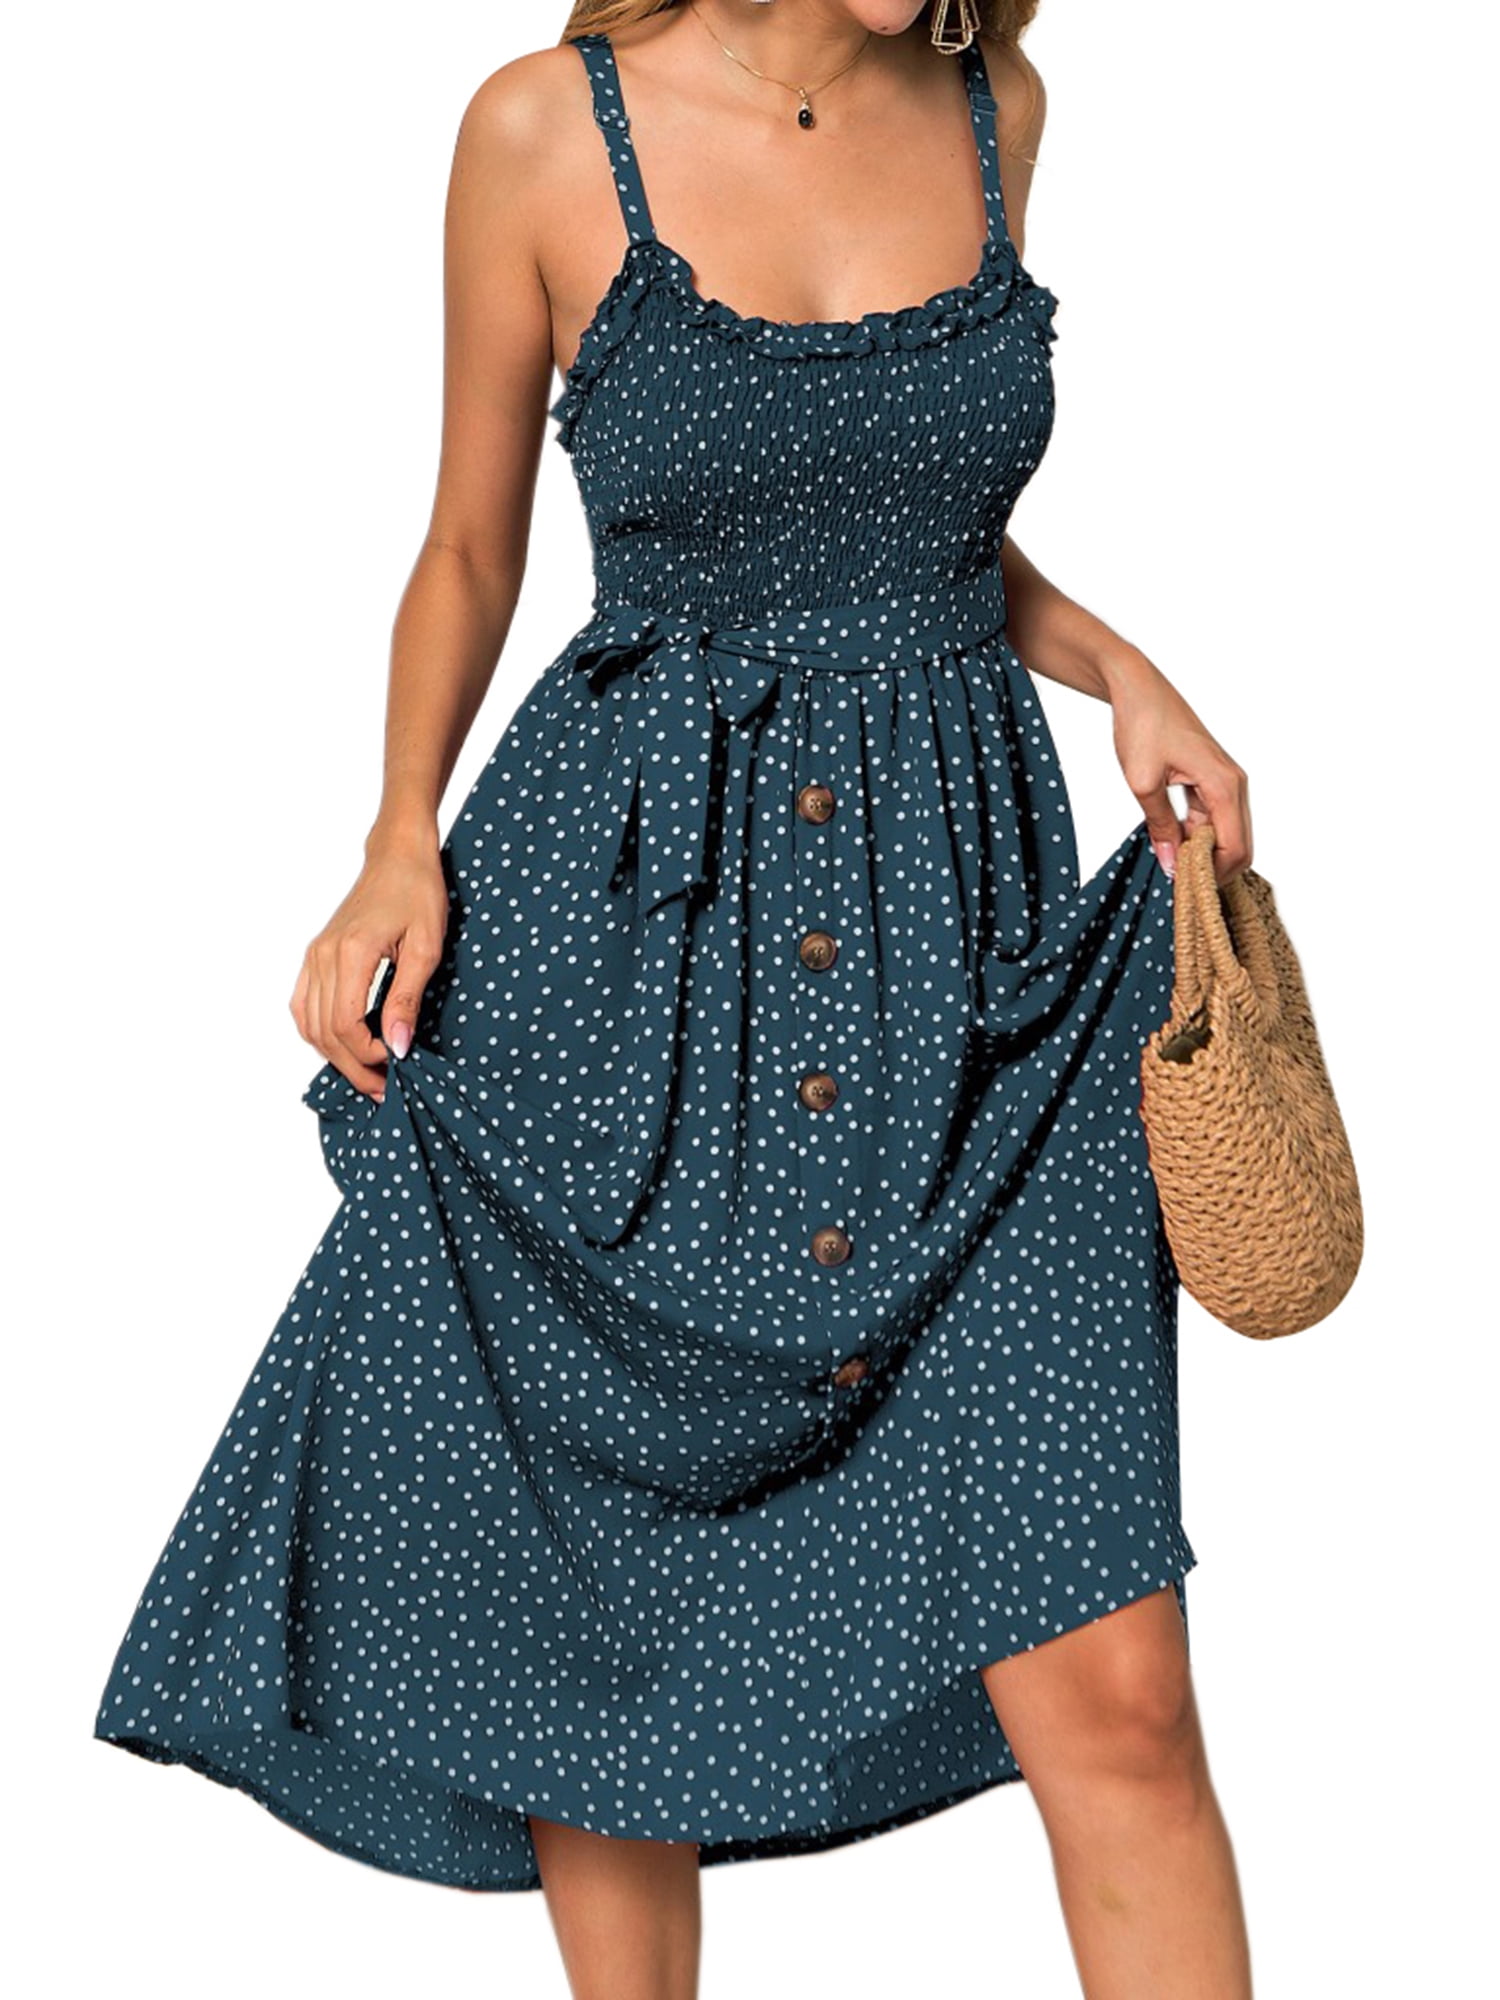 HAVANSIDY Women's Summer Dresses Backless Slim Fit Spaghetti Strap Midi Dress with Pockets 